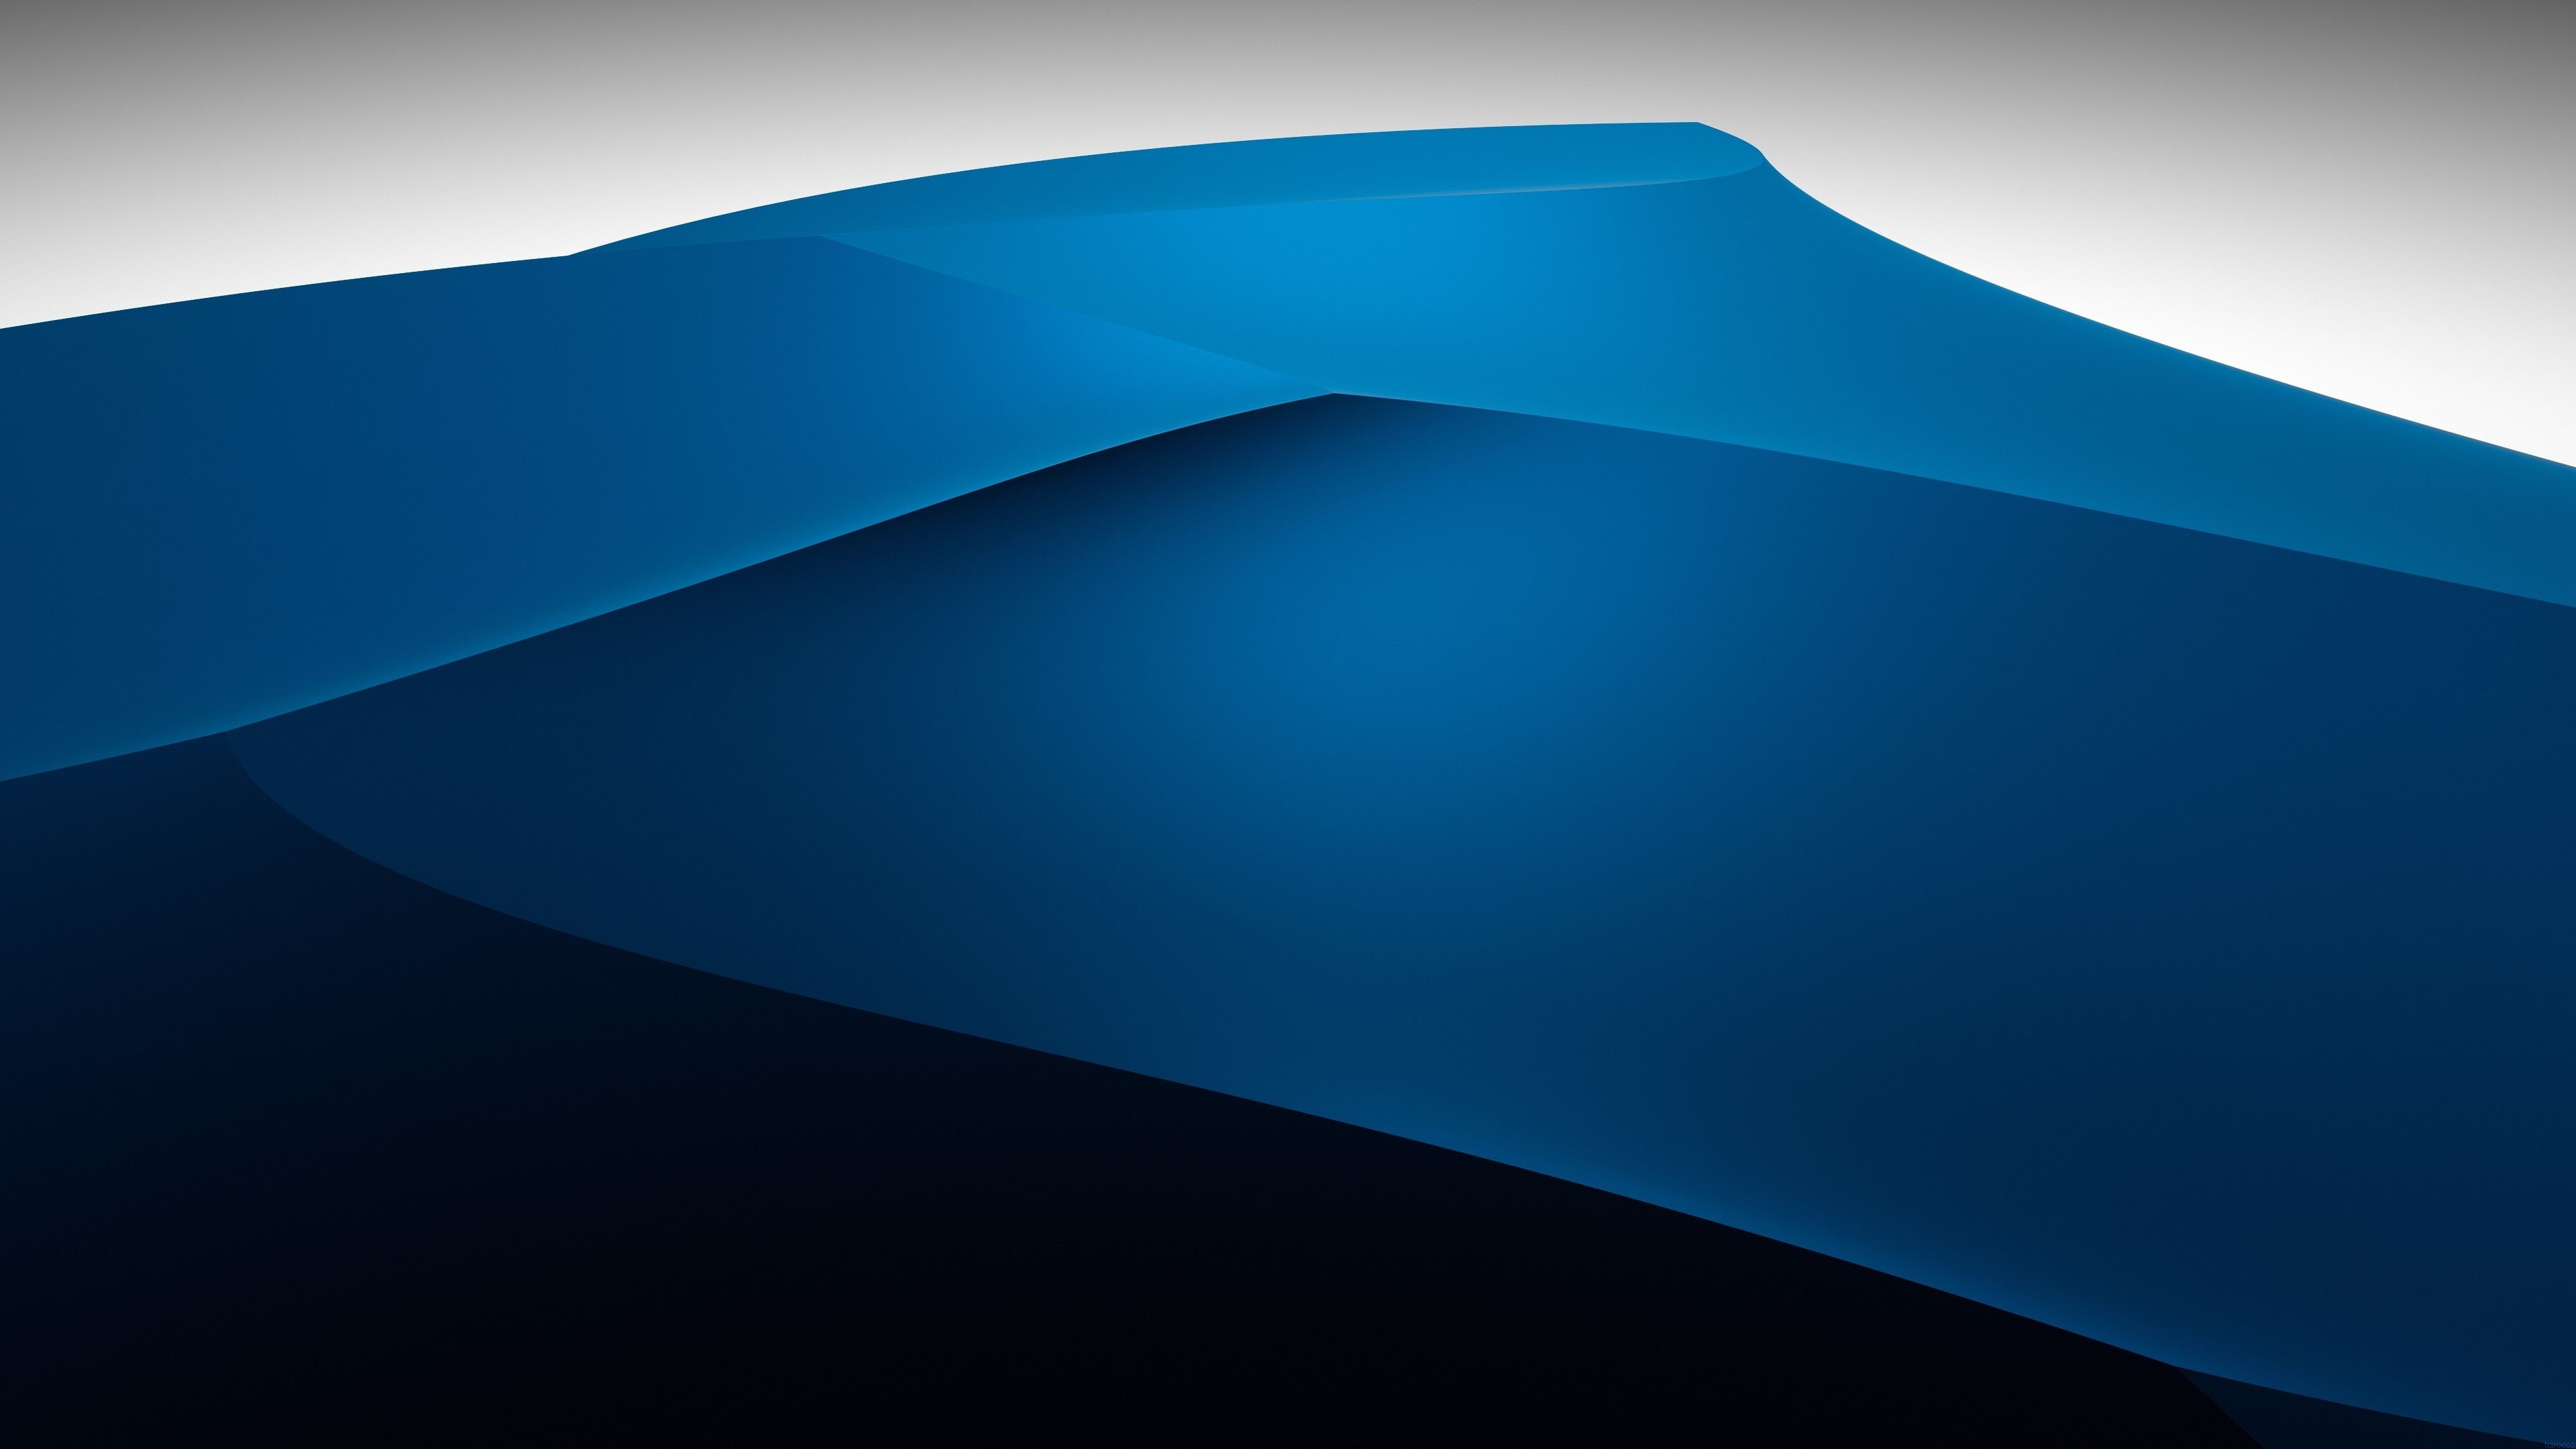 Download 3840x2160 wallpaper blue, mountains, minimalism, 4k, uhd 16: widescreen, 3840x2160 HD image, background, 7750